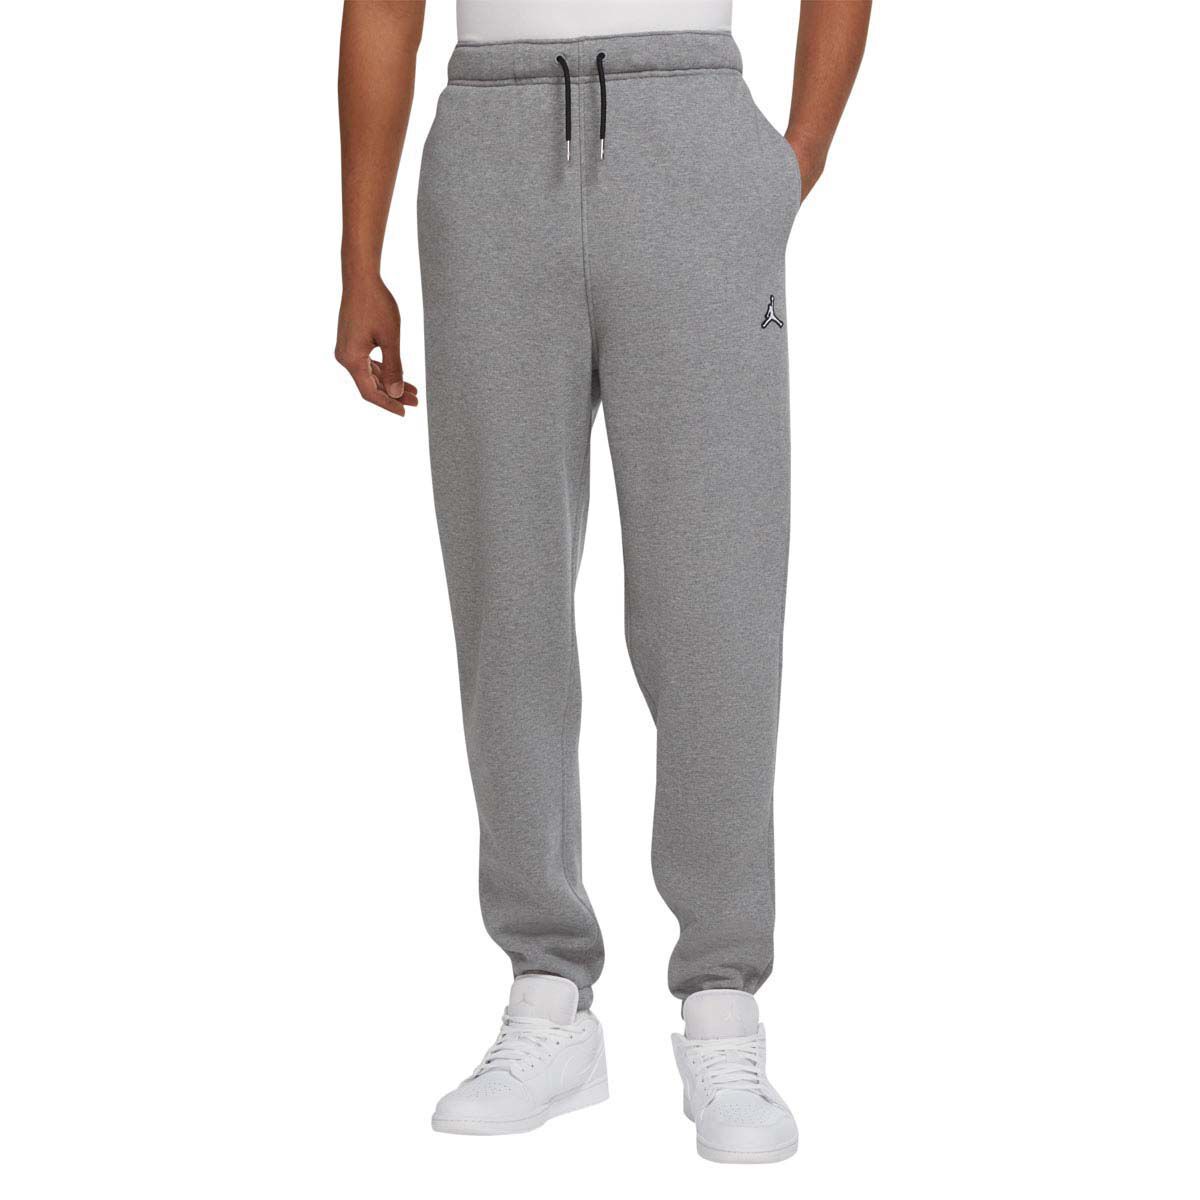 grey jordan pants